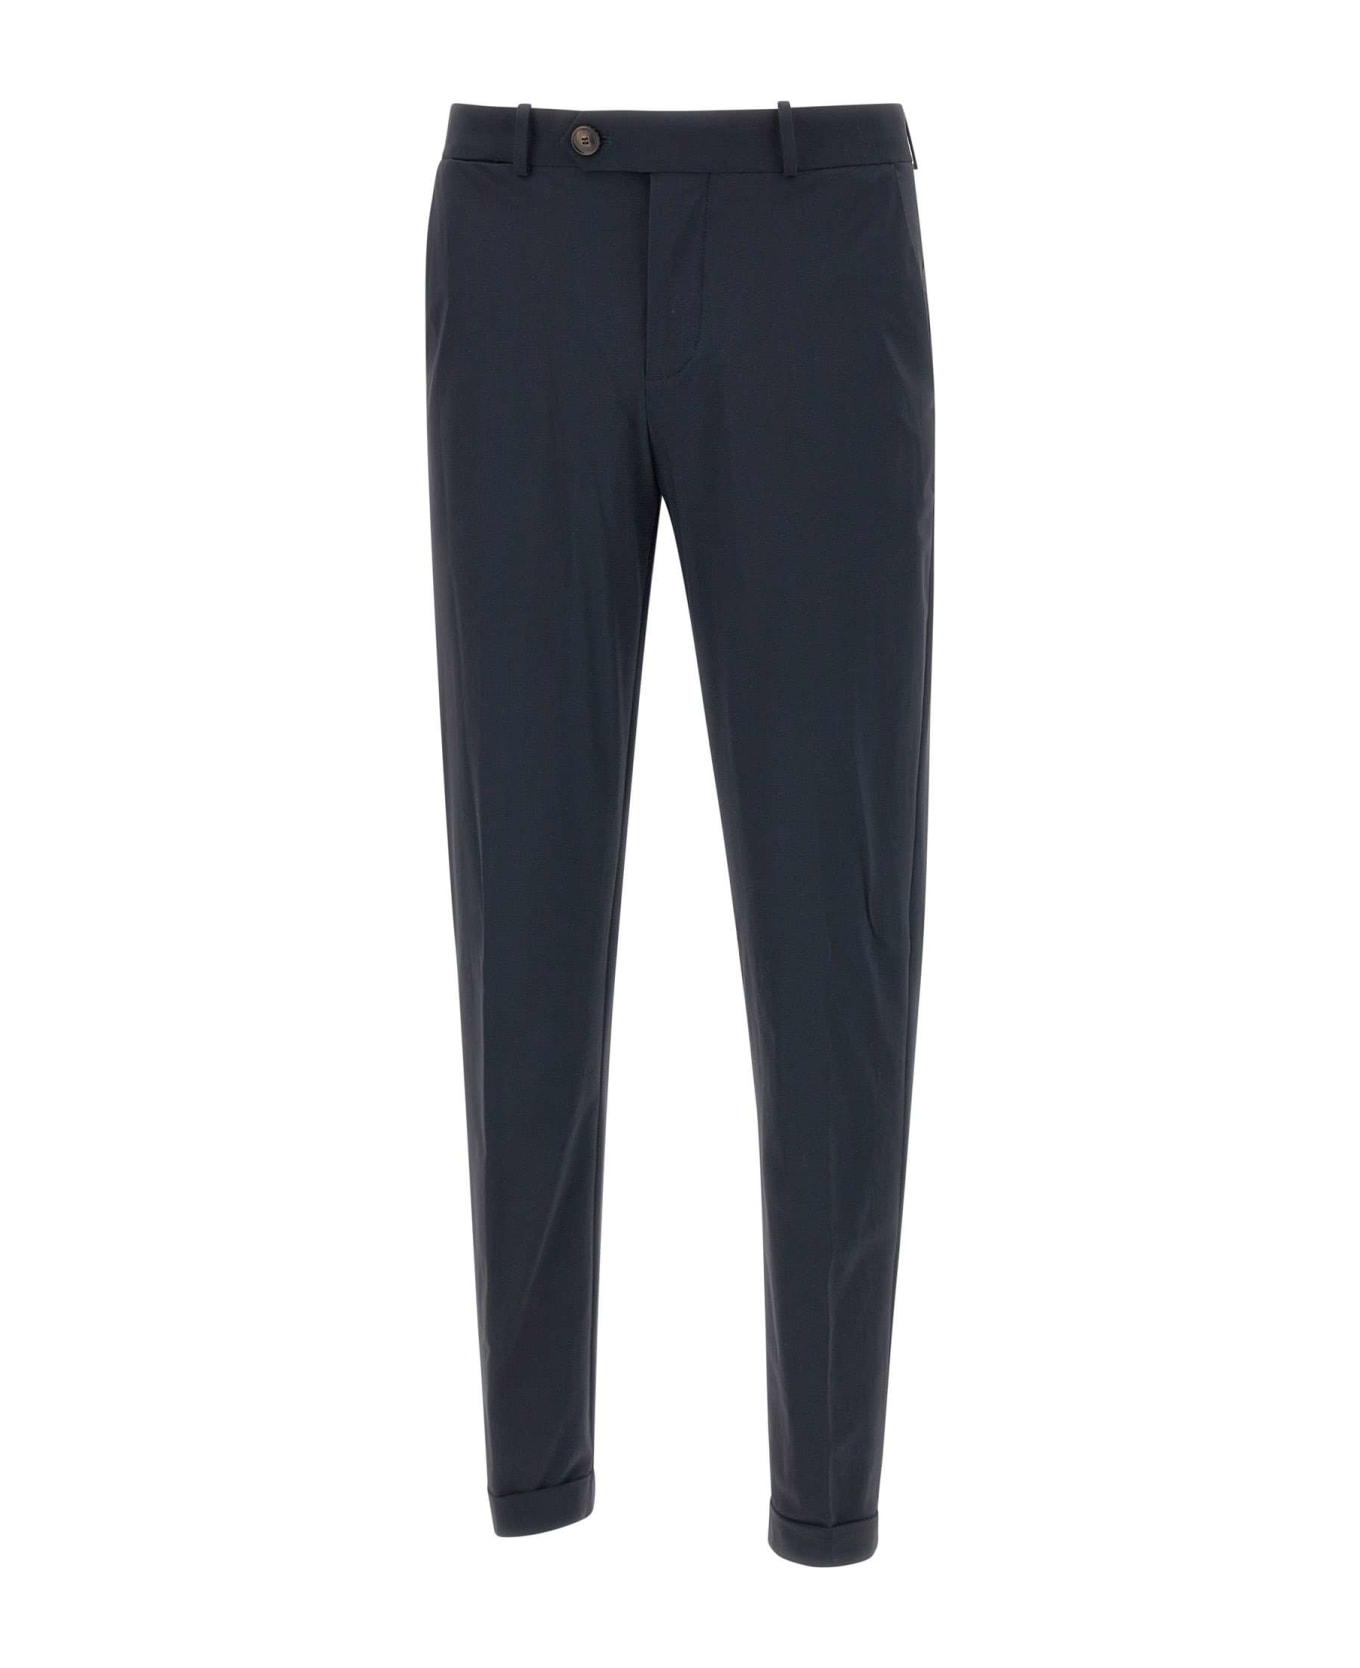 RRD - Roberto Ricci Design Men's Trousers 'revo Chino' Pants - BLUE BLACK